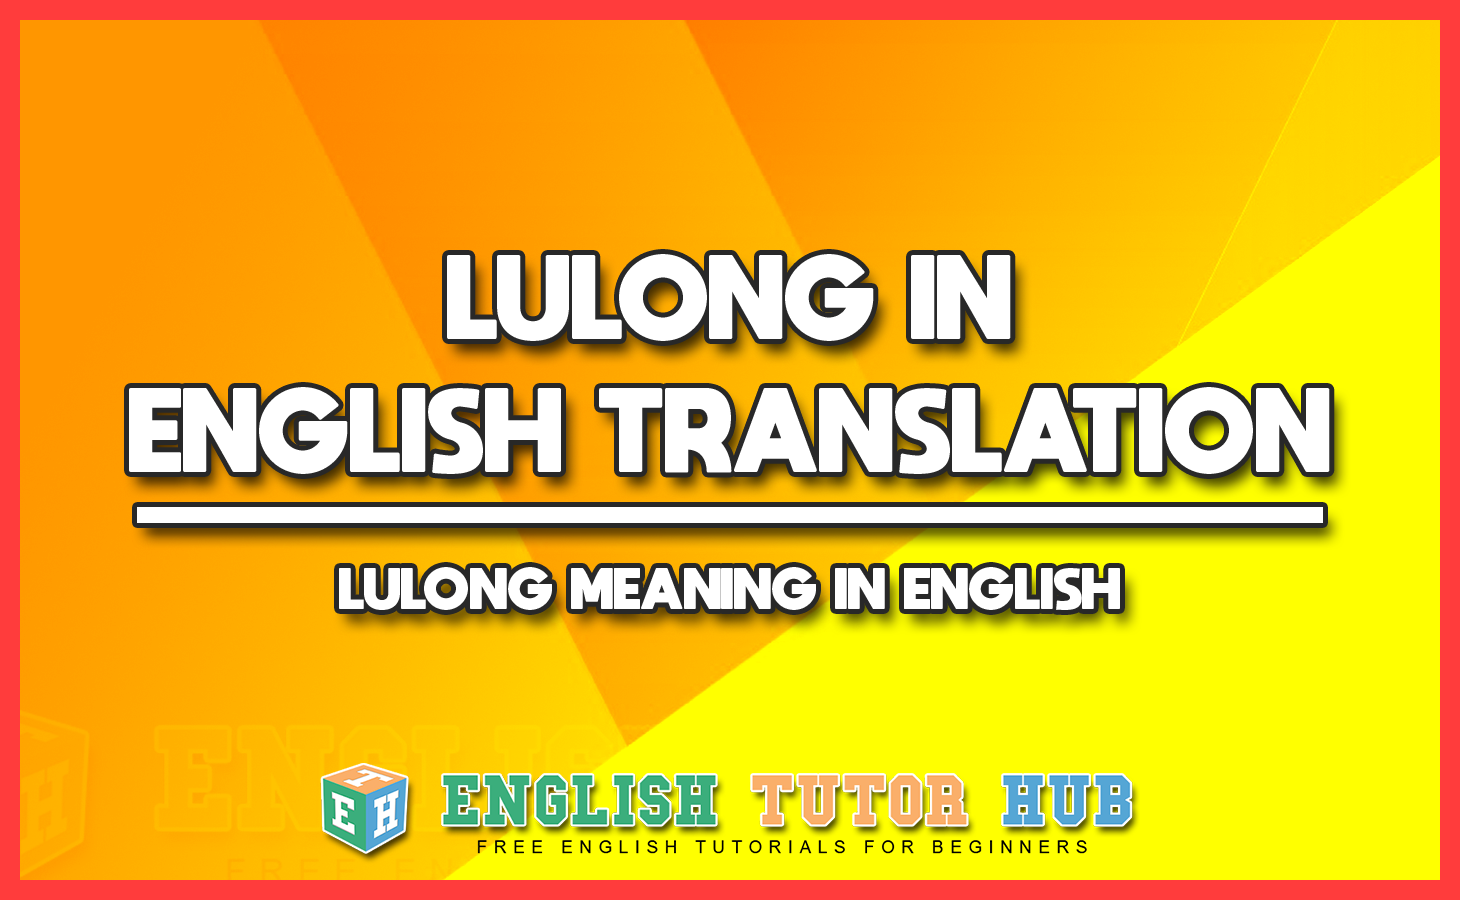 LULONG IN ENGLISH TRANSLATION - LULONG MEANING IN ENGLISH